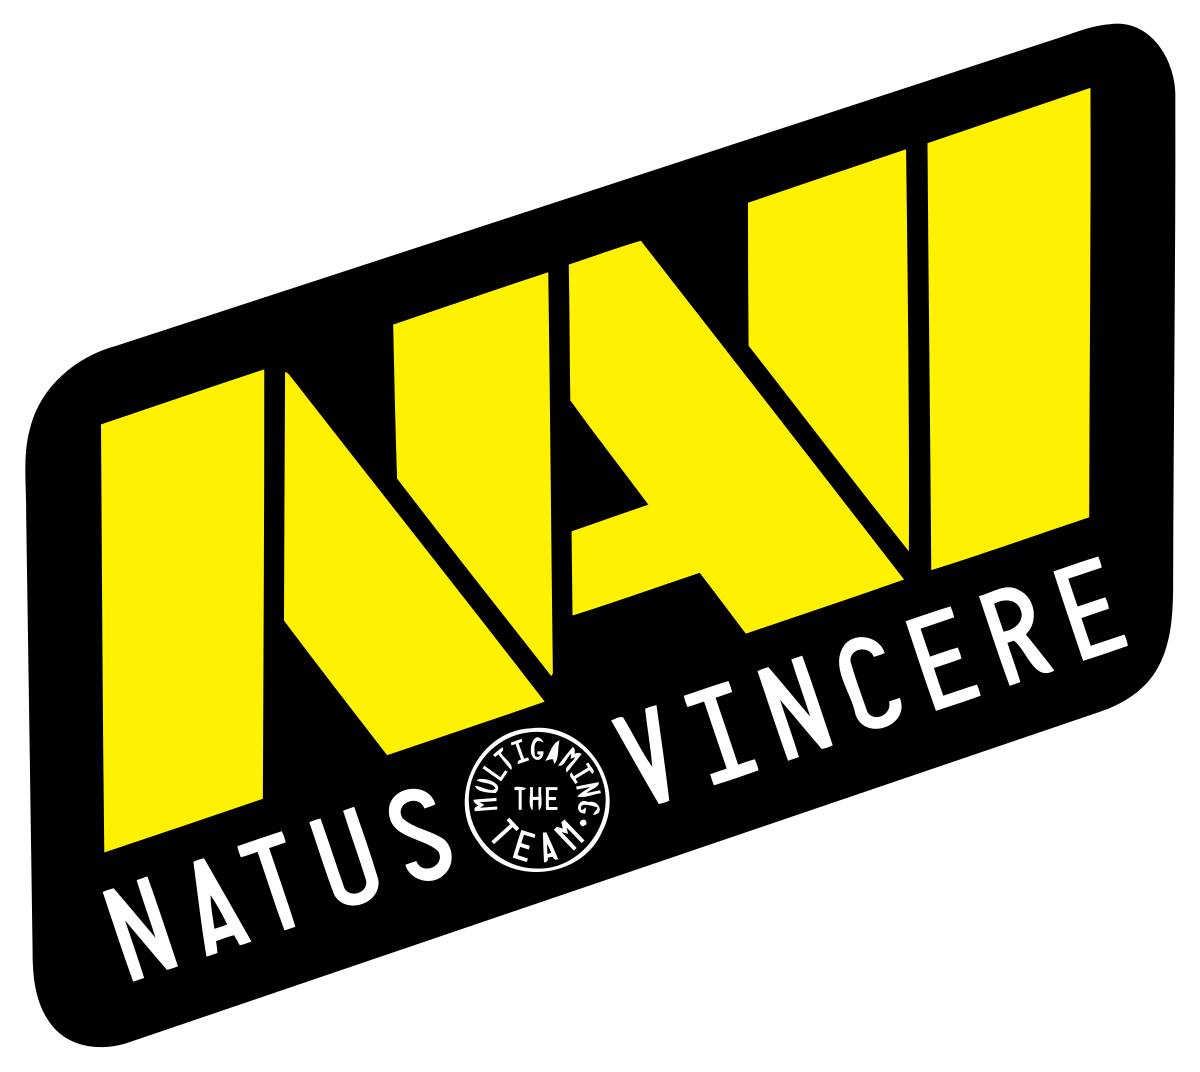 Natus Vincere разгромила OG Esports во втором раунде RMR-турнира